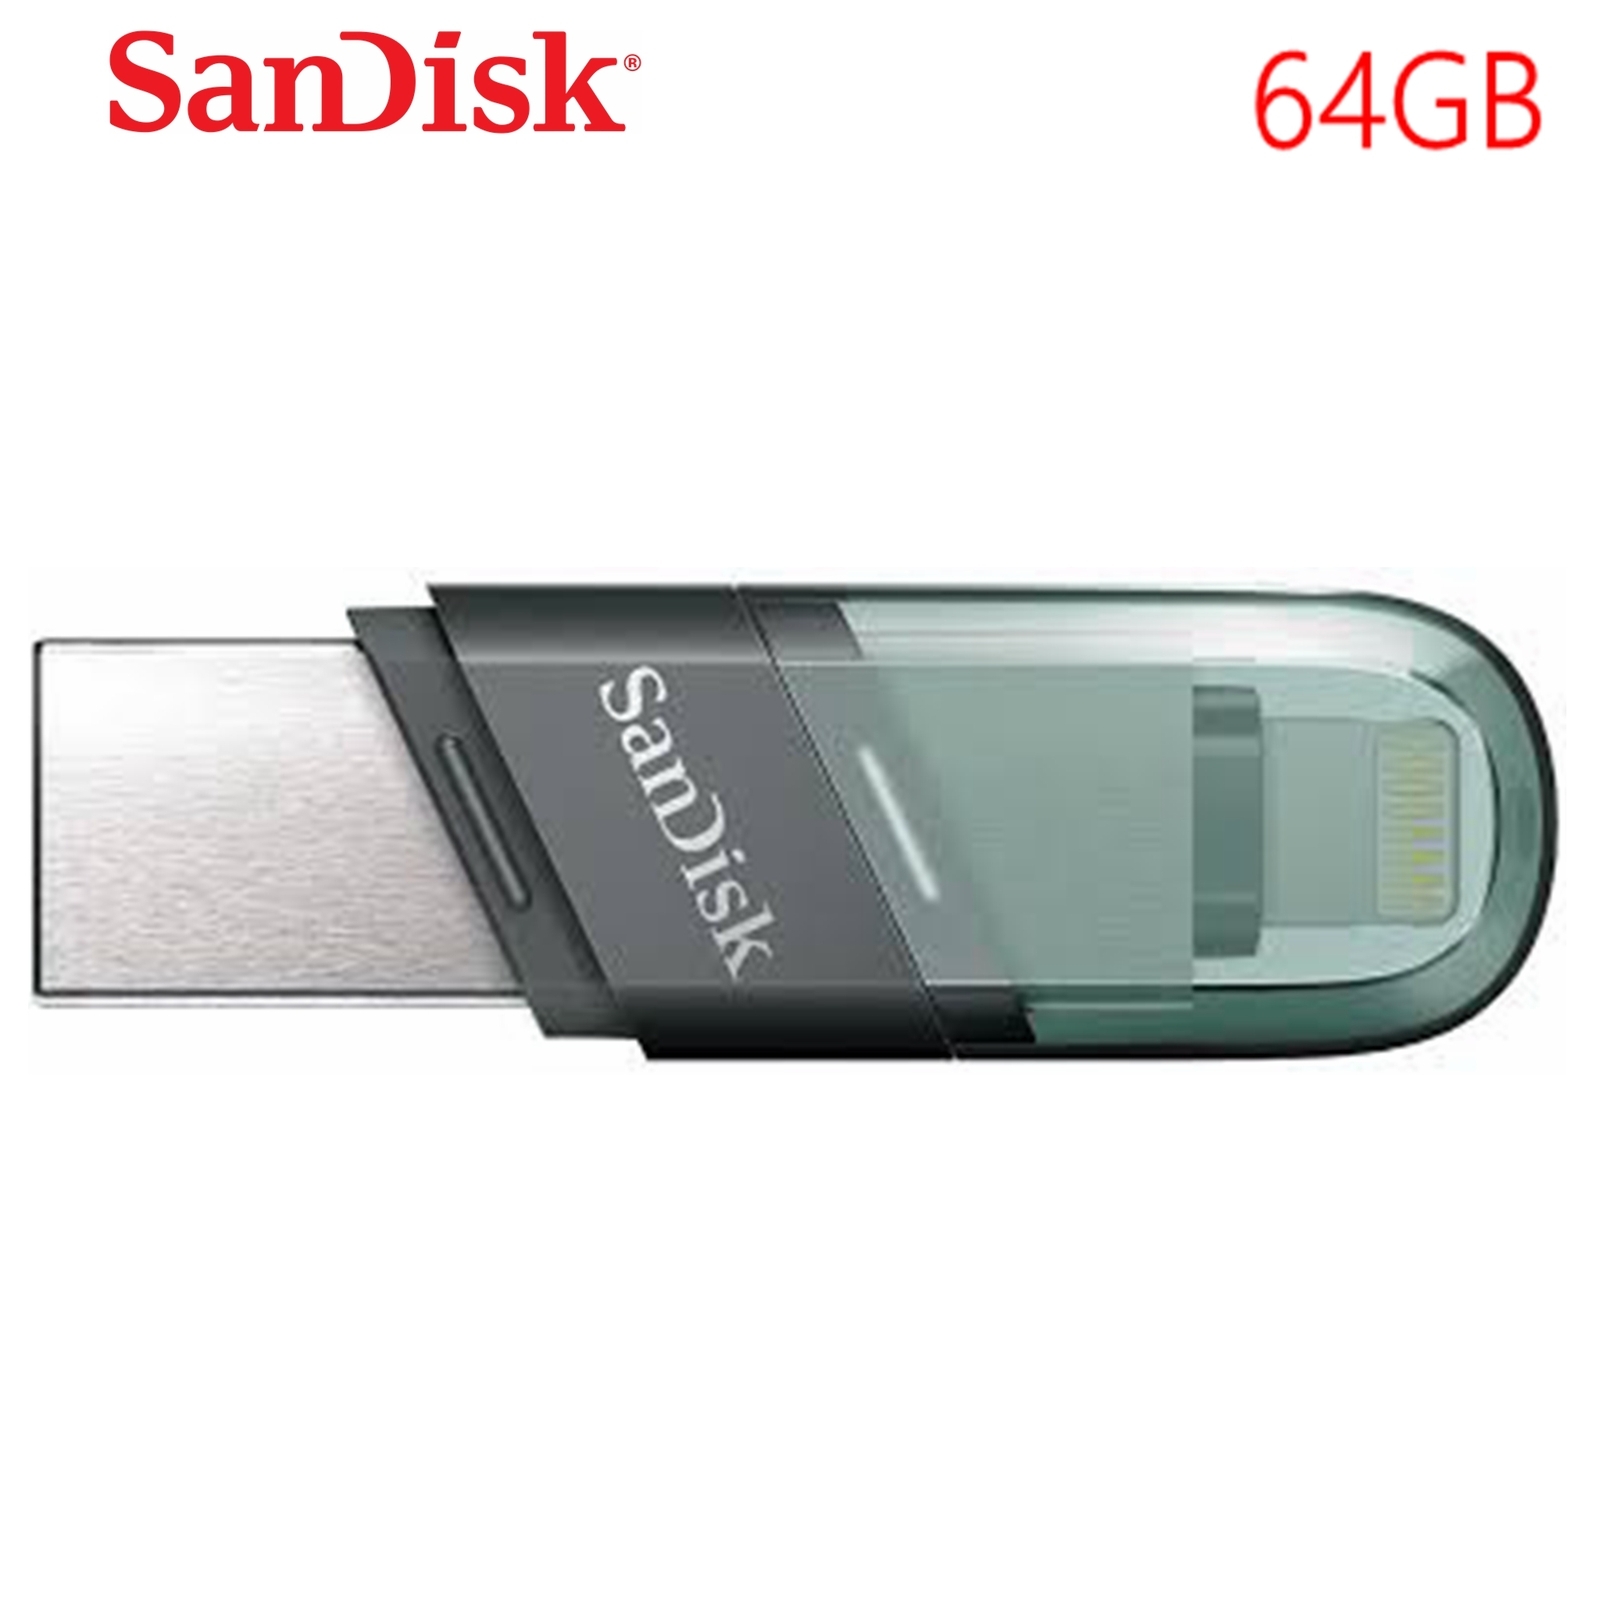 SanDisk iXpand Flash Drive Flip USB 3.1 Lightning USB 64 GB For iPhone, iPad and PC SDIX90N-064G